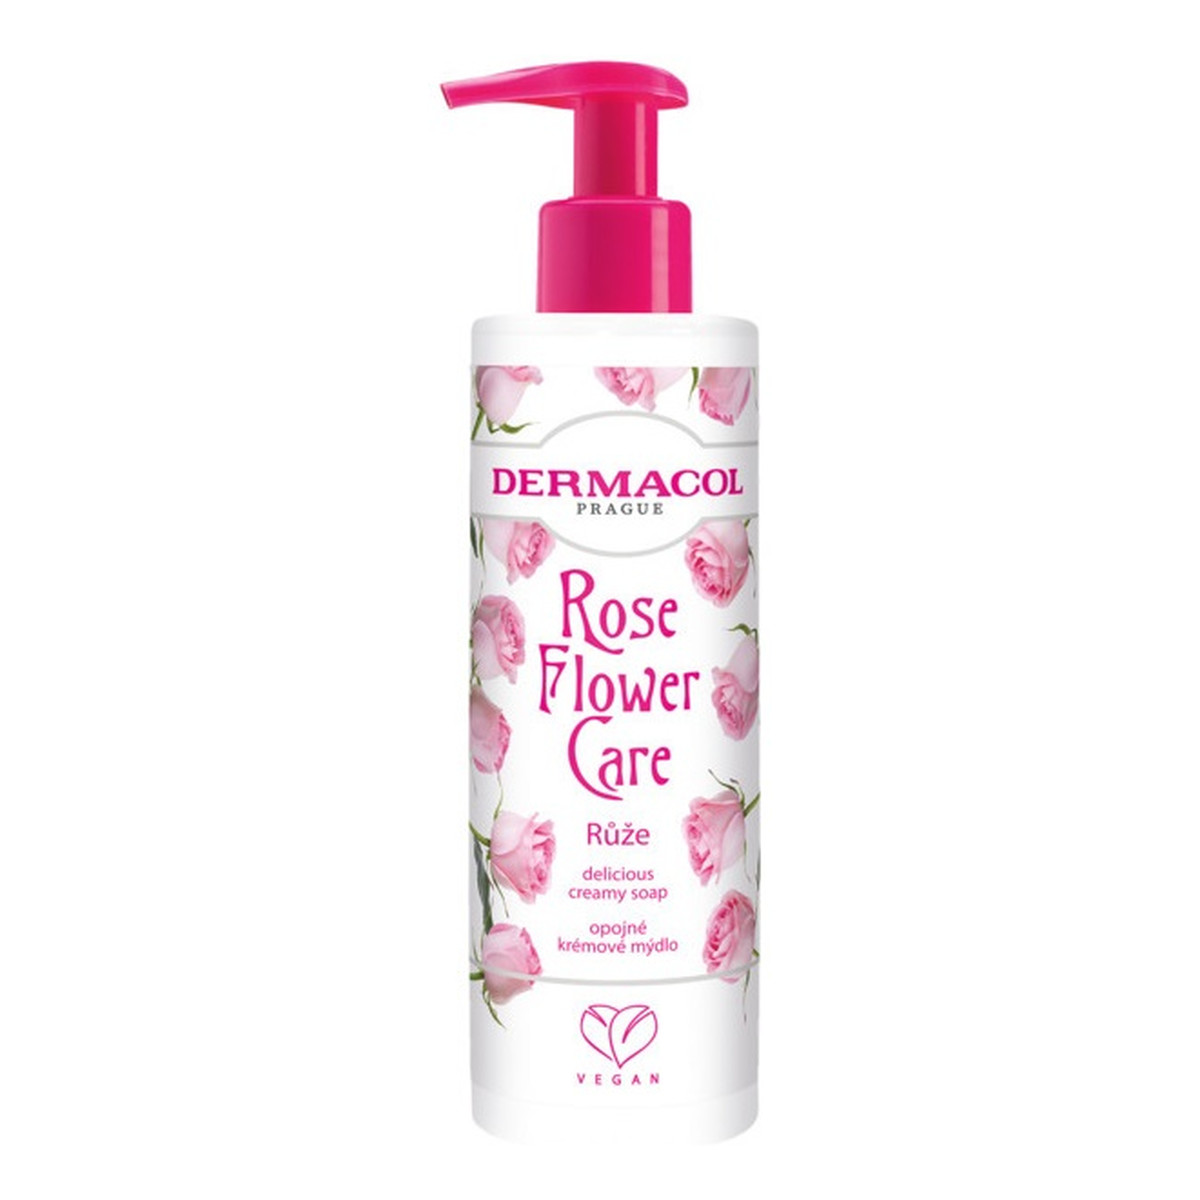 Dermacol Flower Care Creamy Hand Soap Mydło do rąk rose 250ml